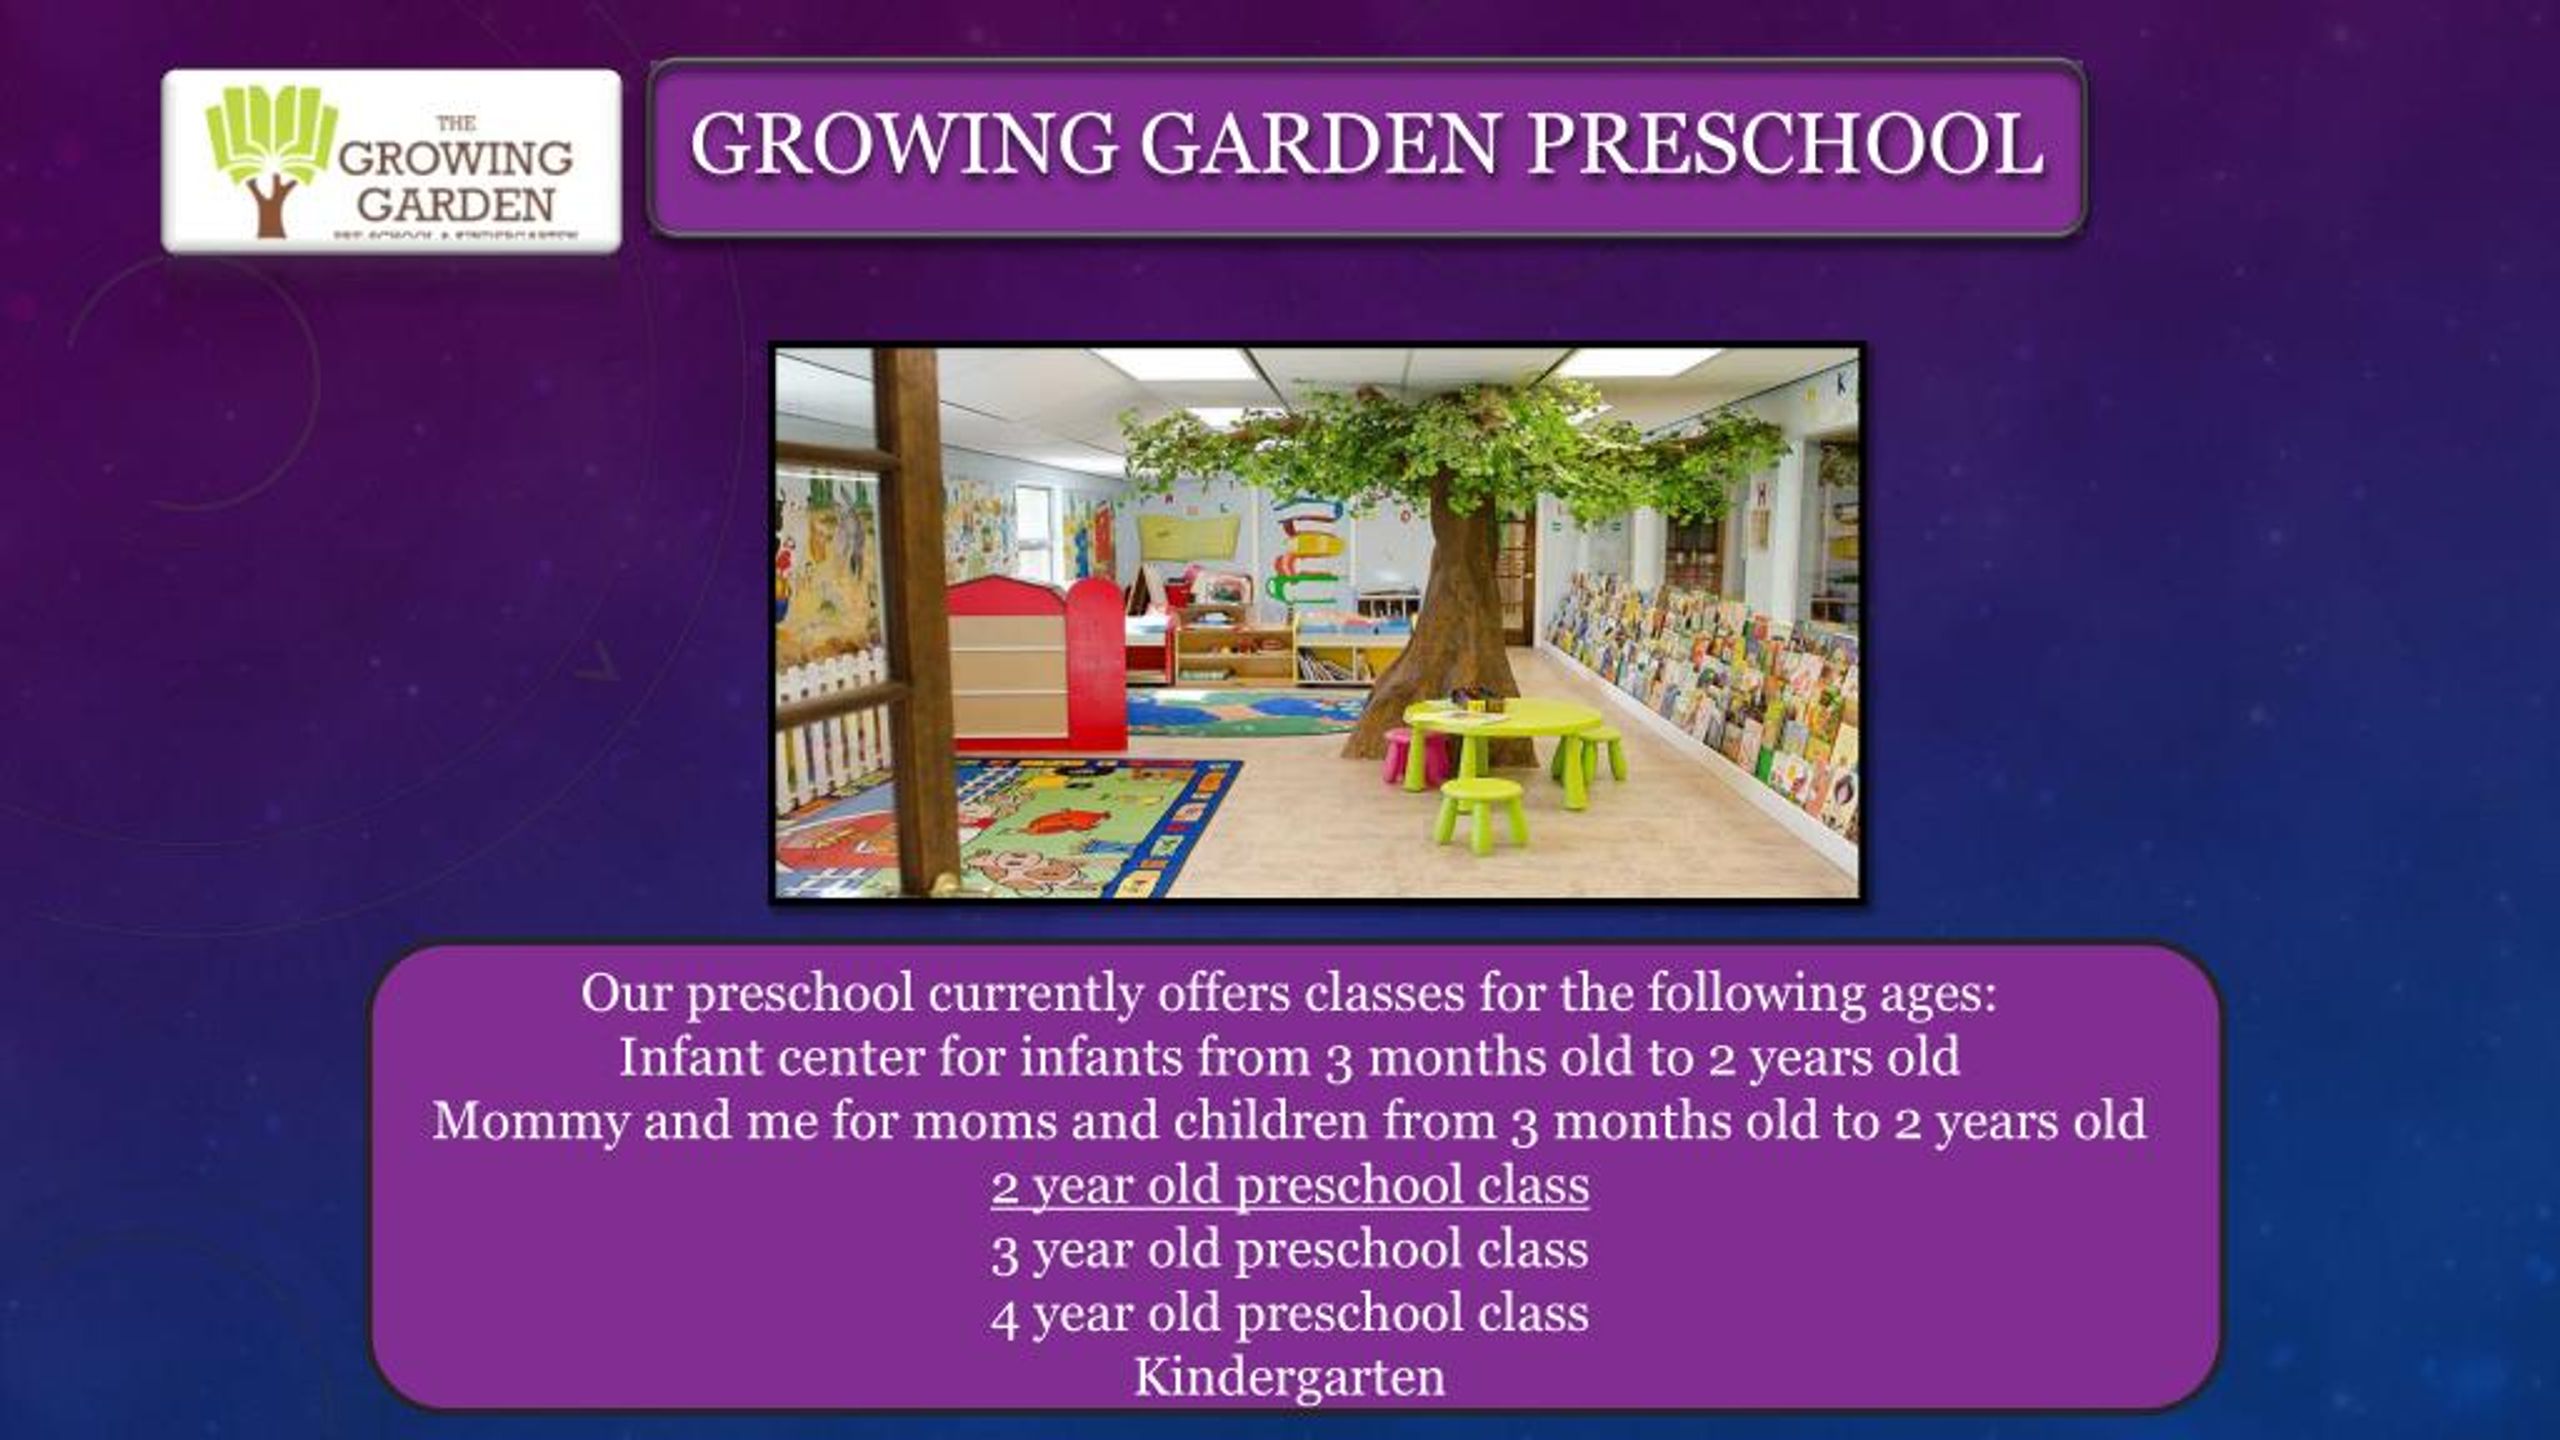 Ppt Growing Garden Preschool Powerpoint Presentation Free